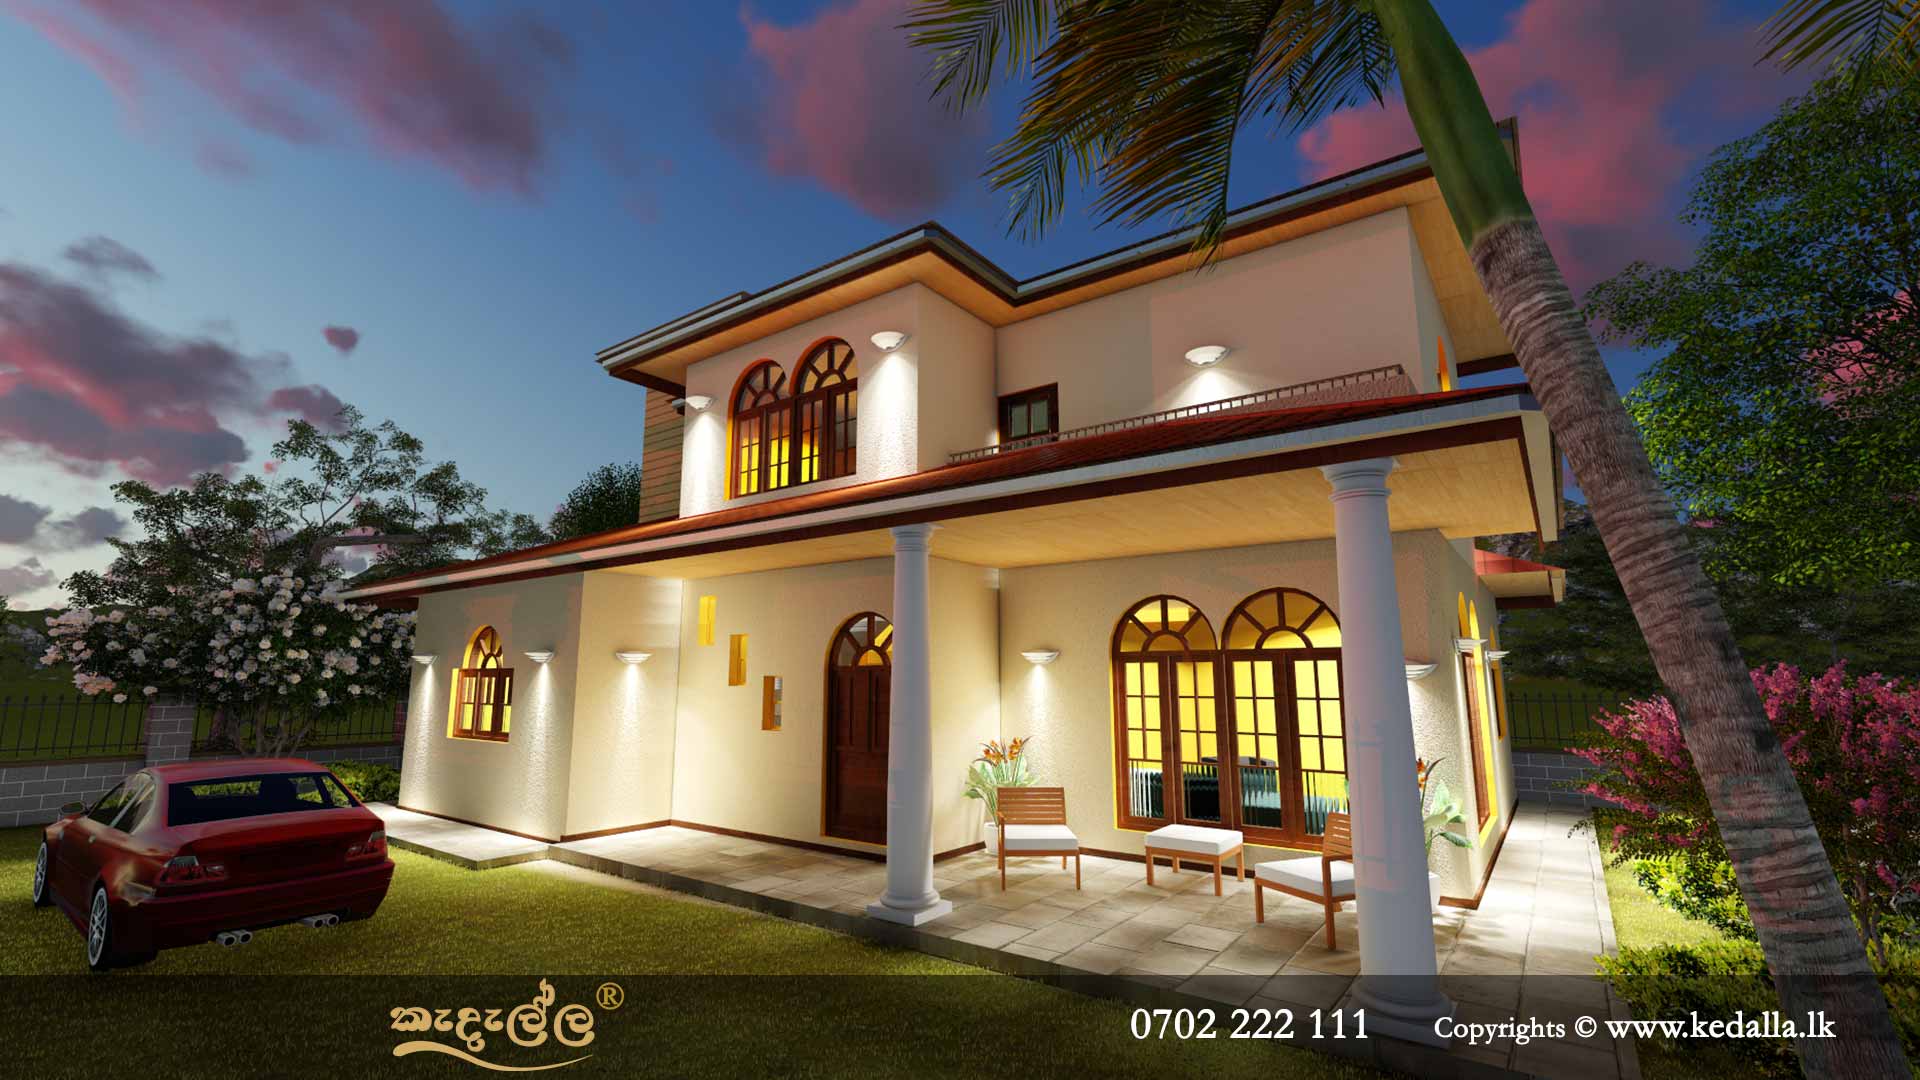 House Plans in Sri Lanka|1000 Amazing House Plans|Kedalla.lk